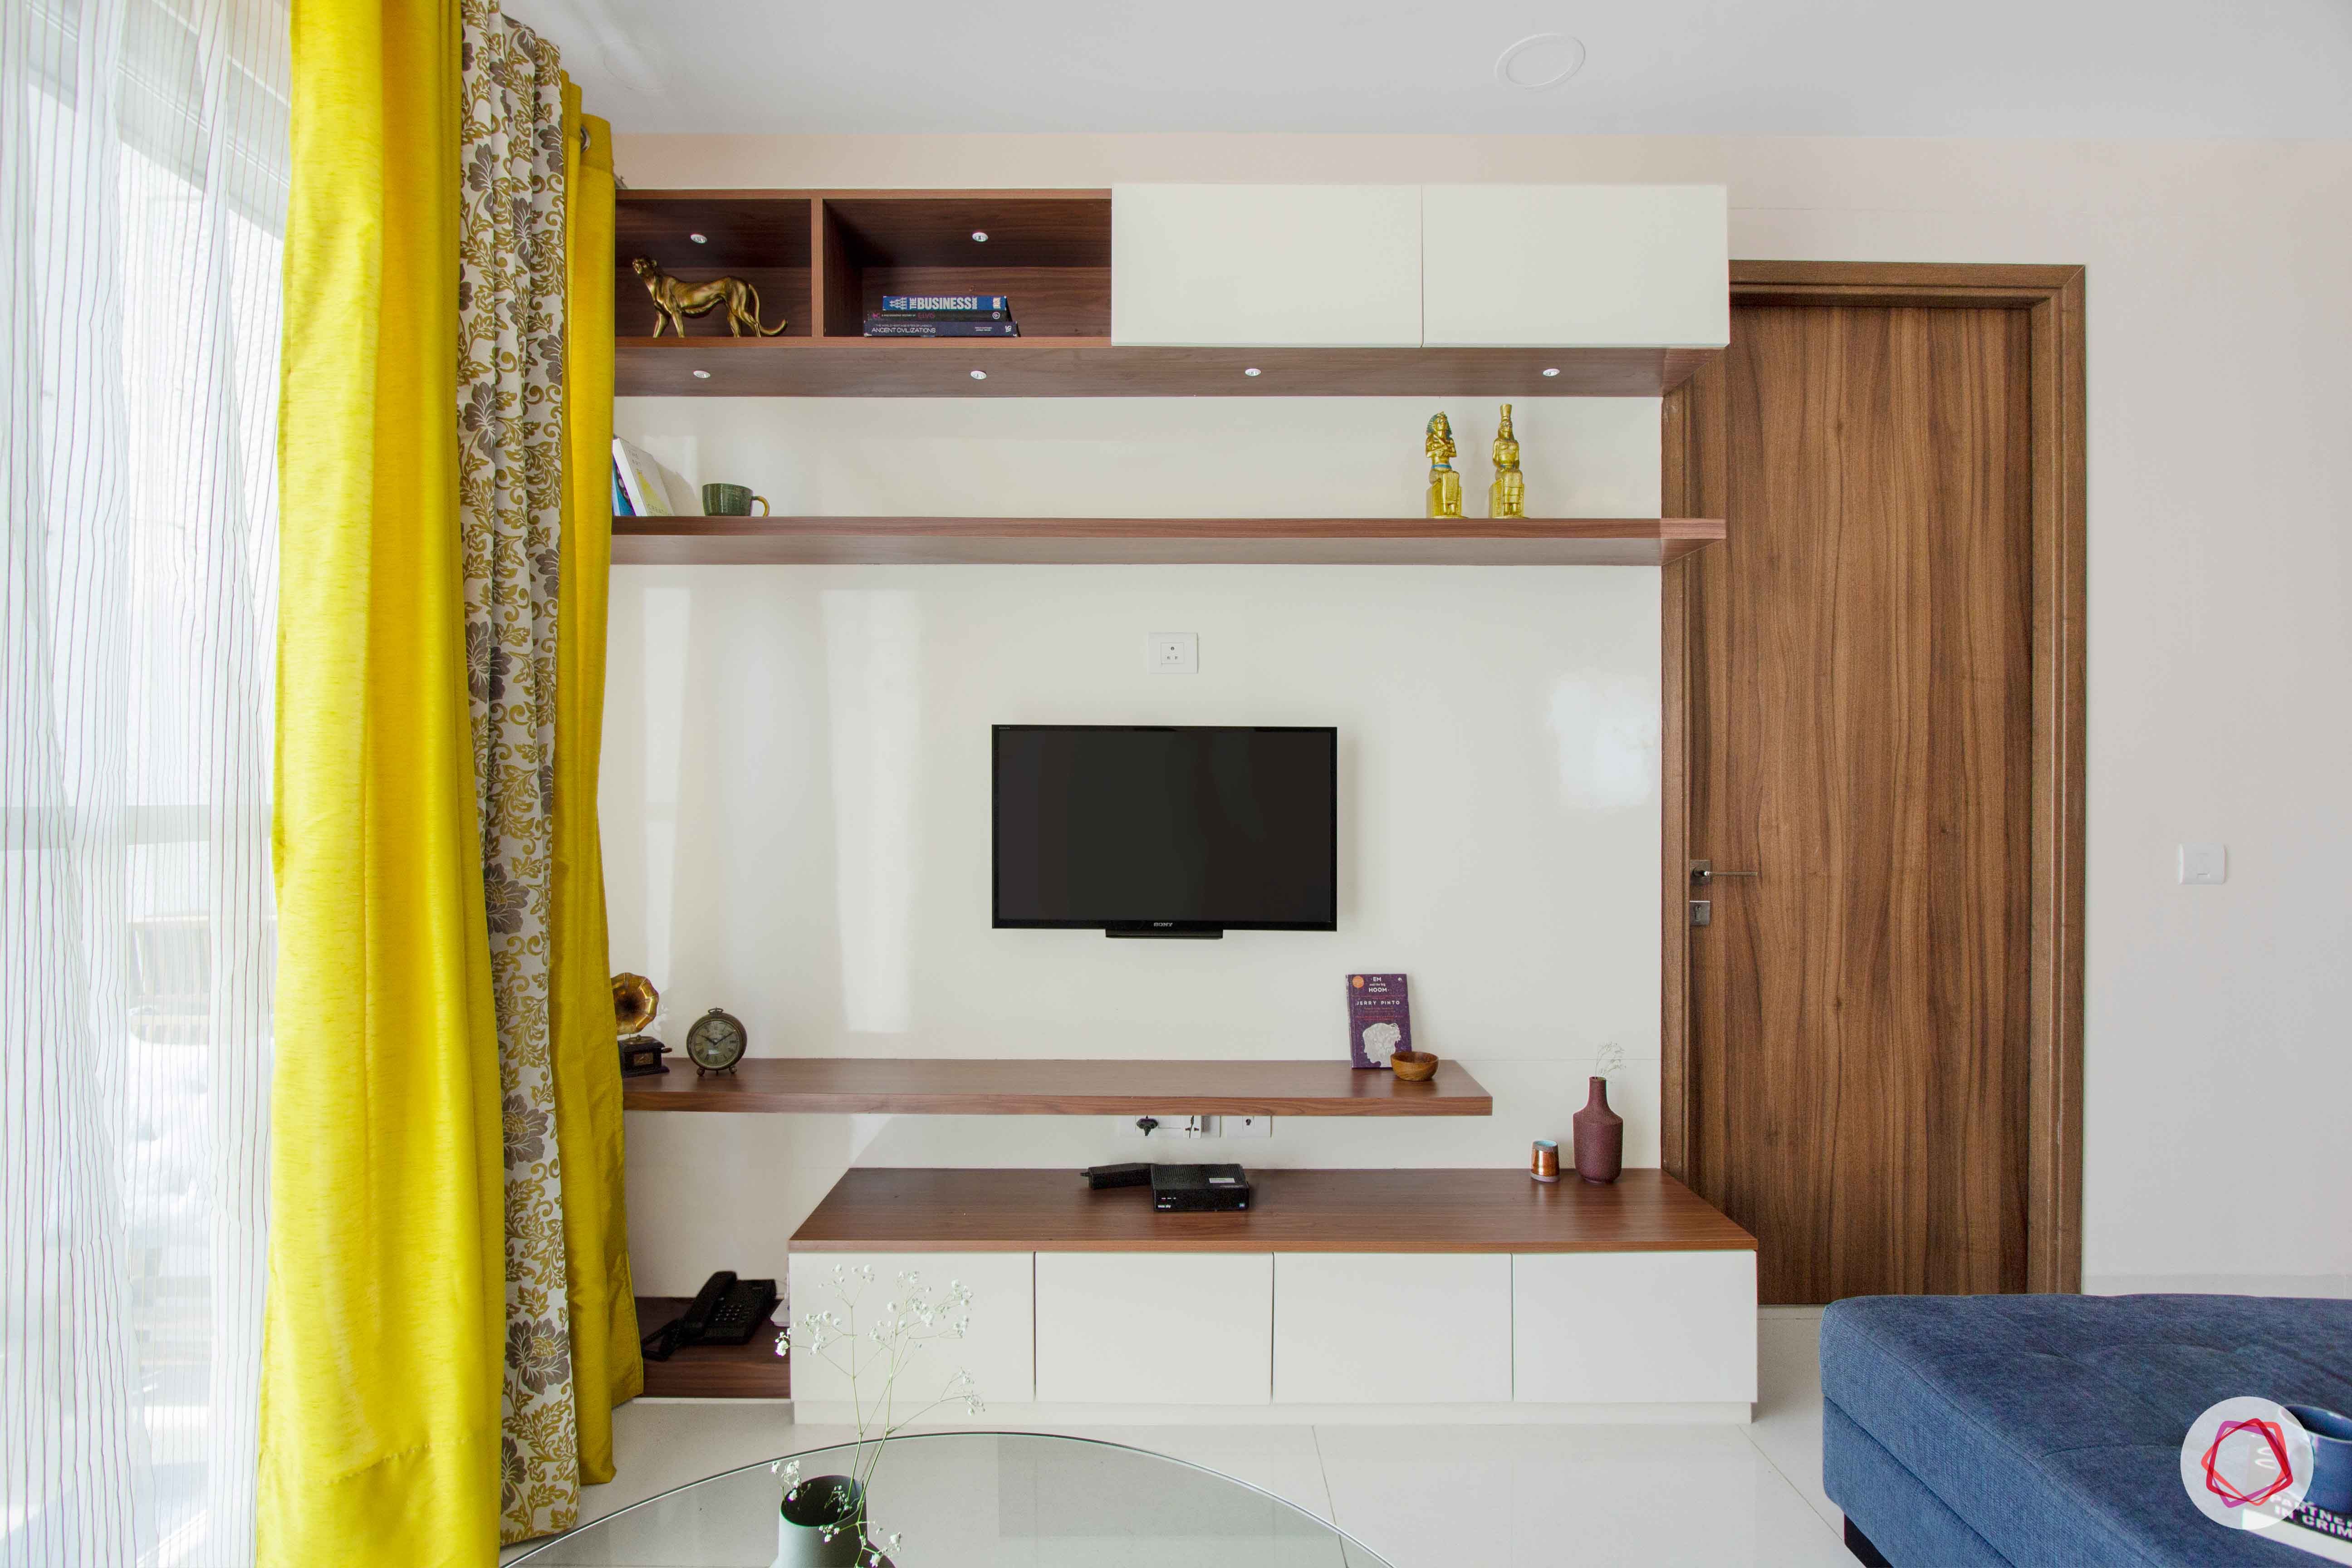 snn raj greenbay-laminate tv unit-display shelves-wall ledges